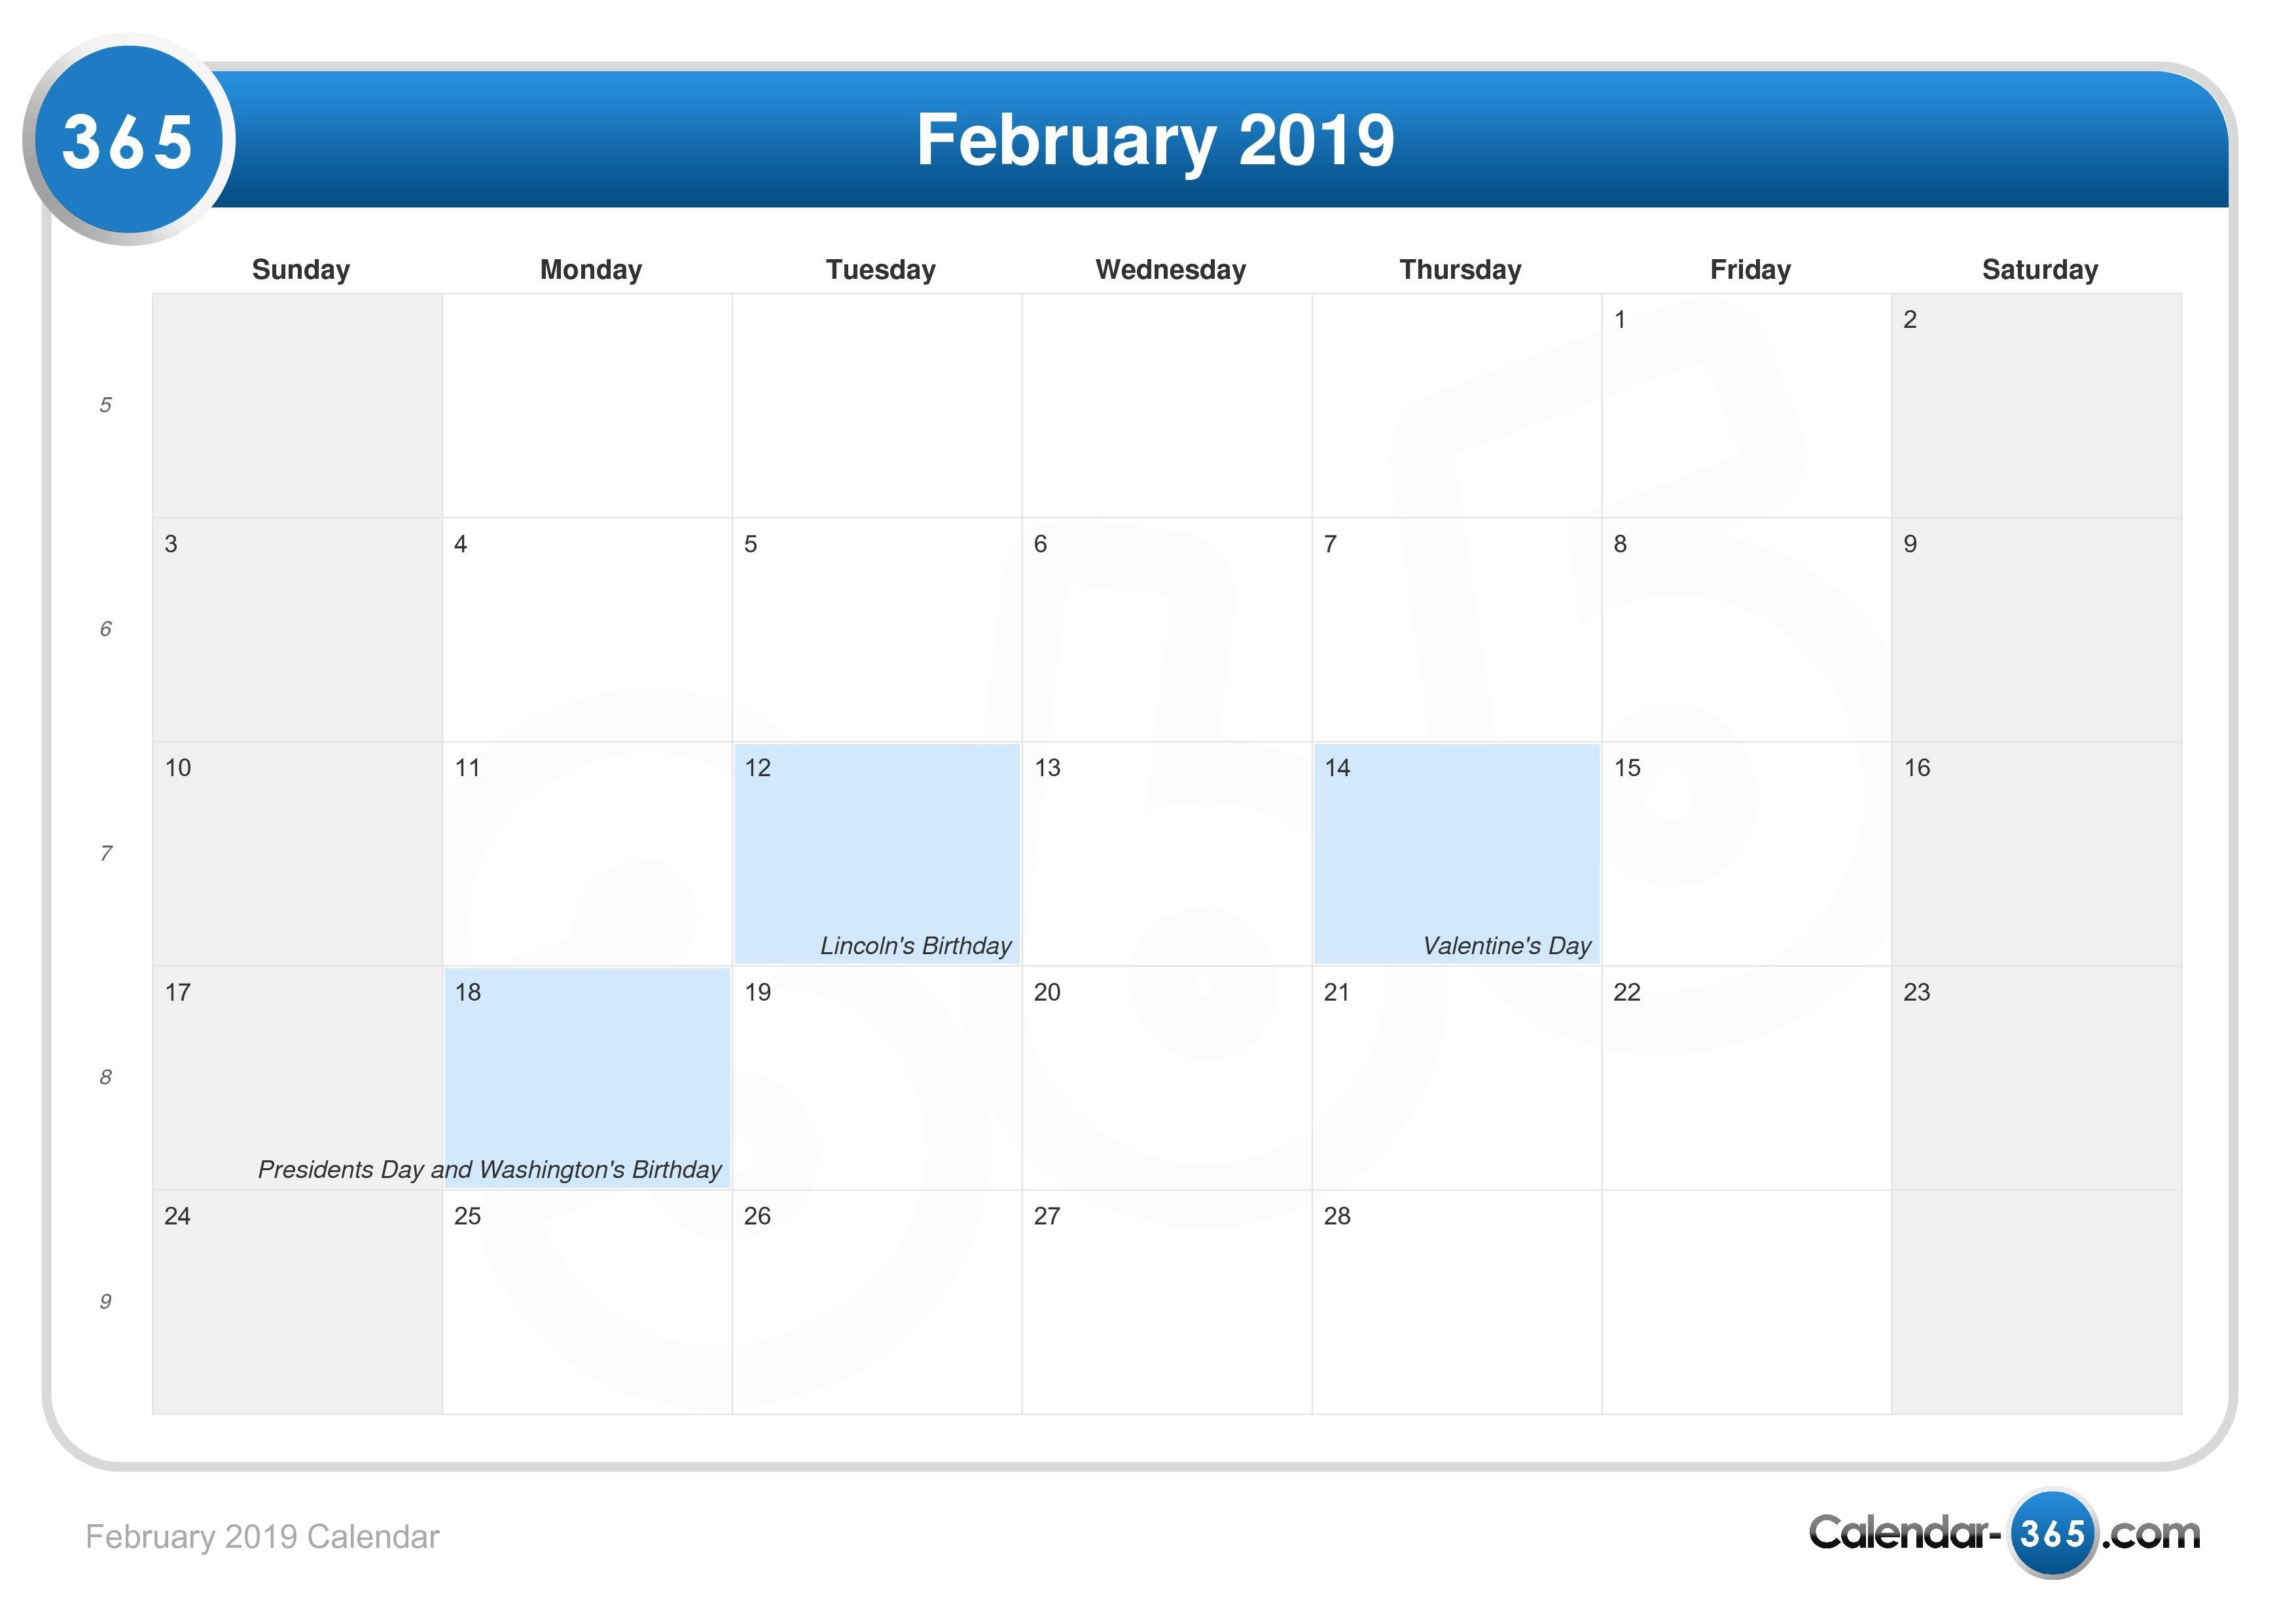 february-2019-calendar-presidents-day-qualads